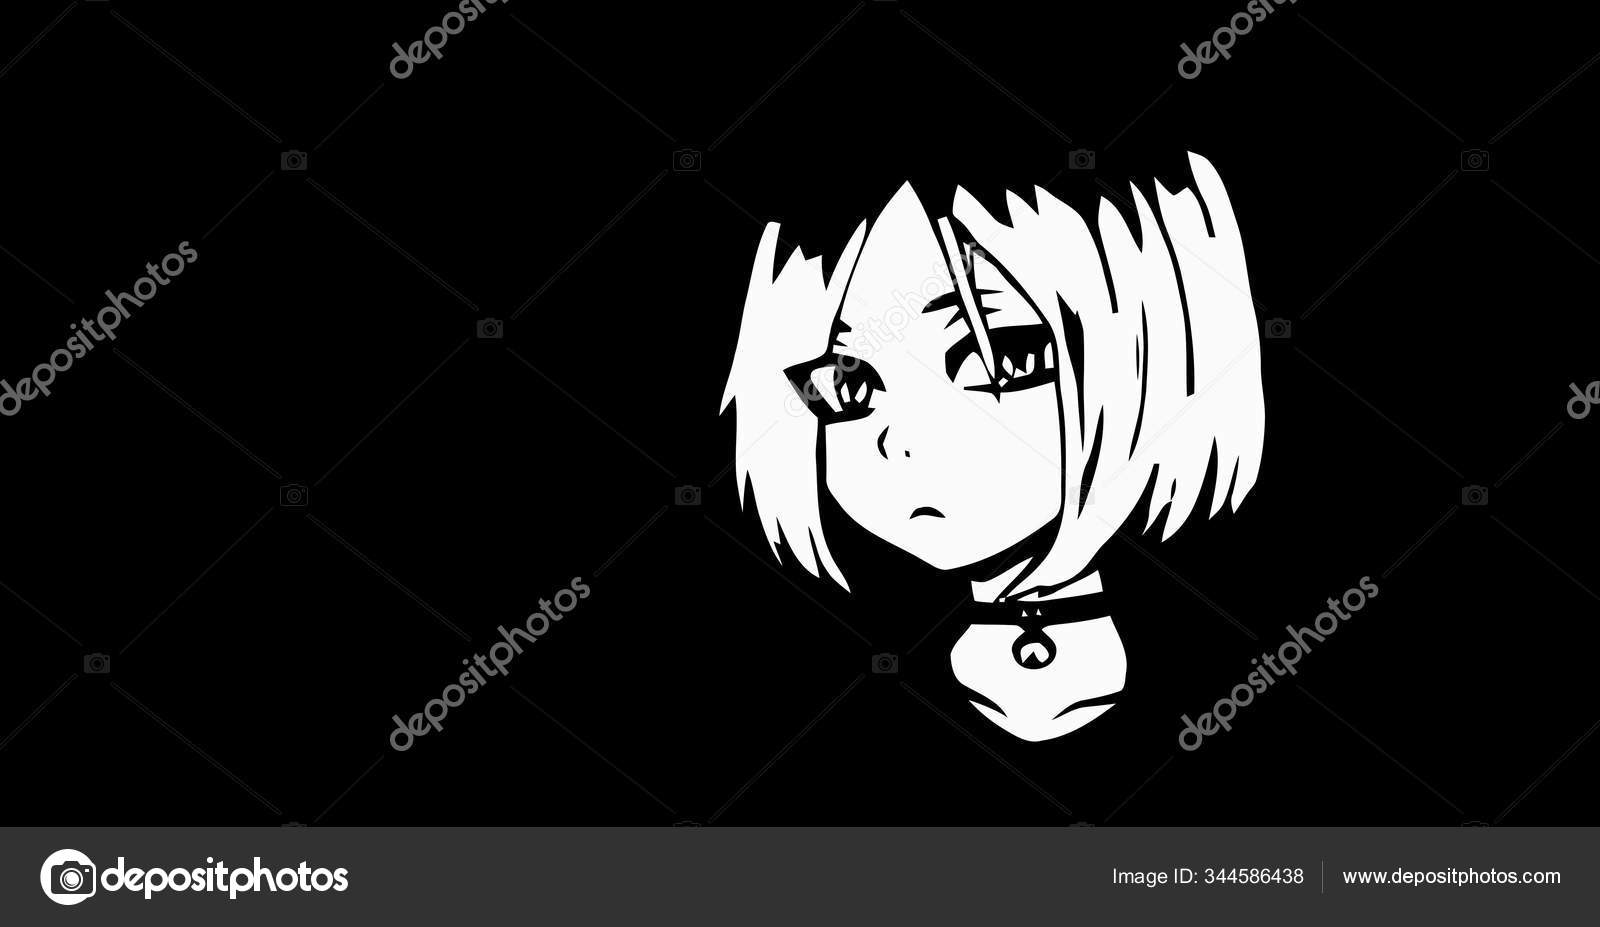 Anime Wallpapers Black White Anime Cute Boy Transgender Manga Style Stock Photo C Satoshy 344586438,How To Paint Kitchen Cabinets Black